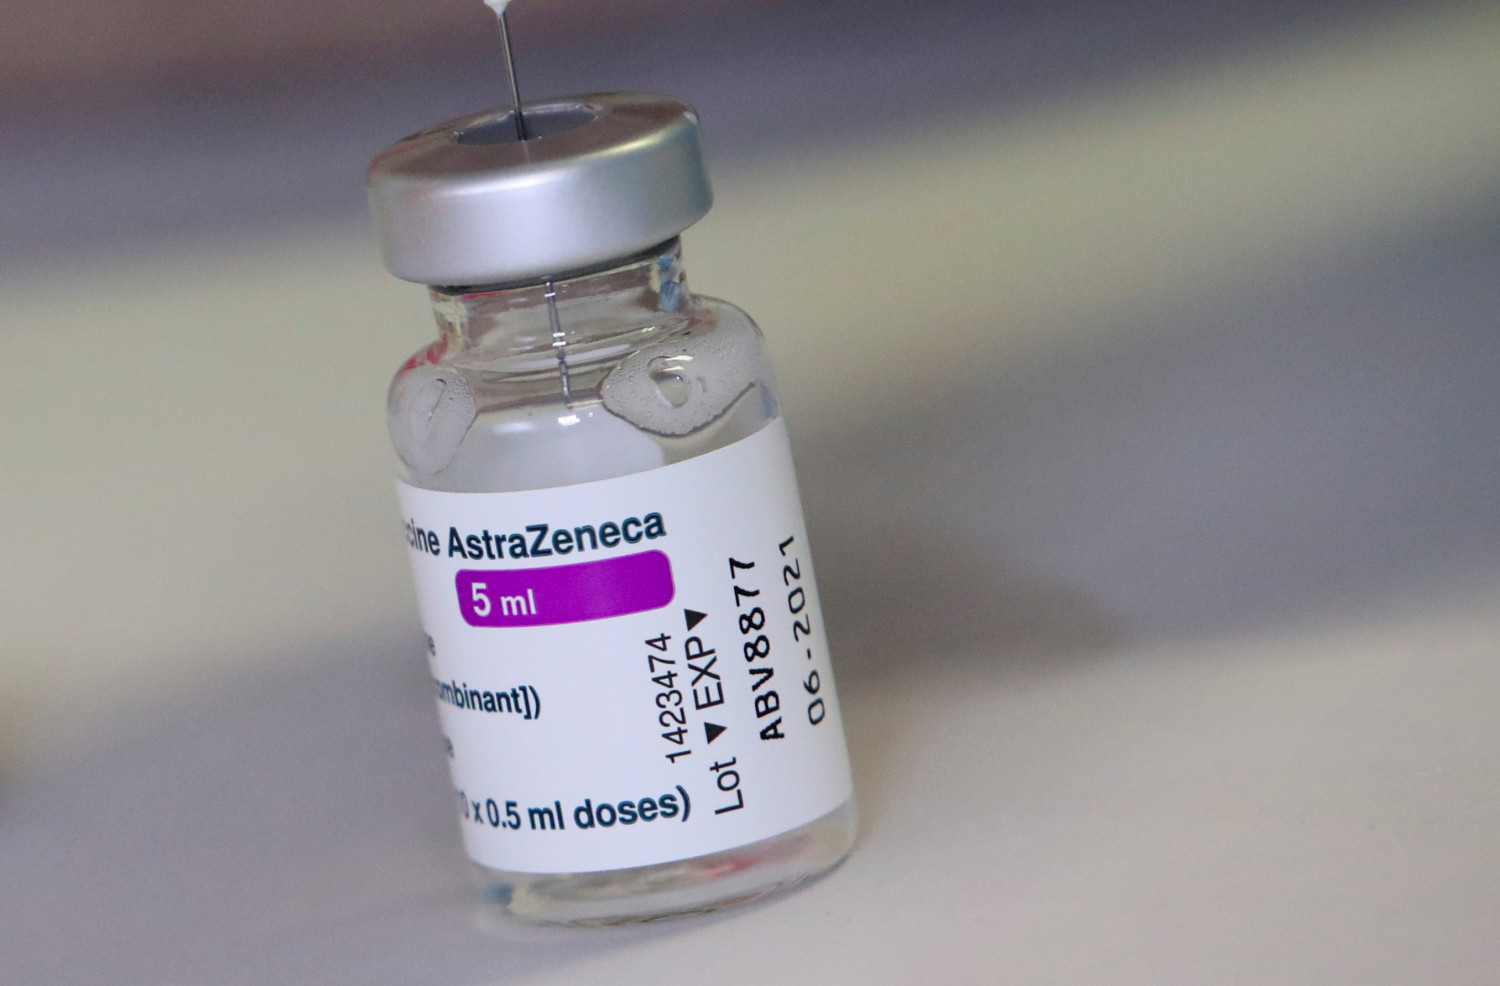 coronavirus des vaccins astrazeneca produits en grande bretagne expedies en australie rapporte la presse 20210411104428 